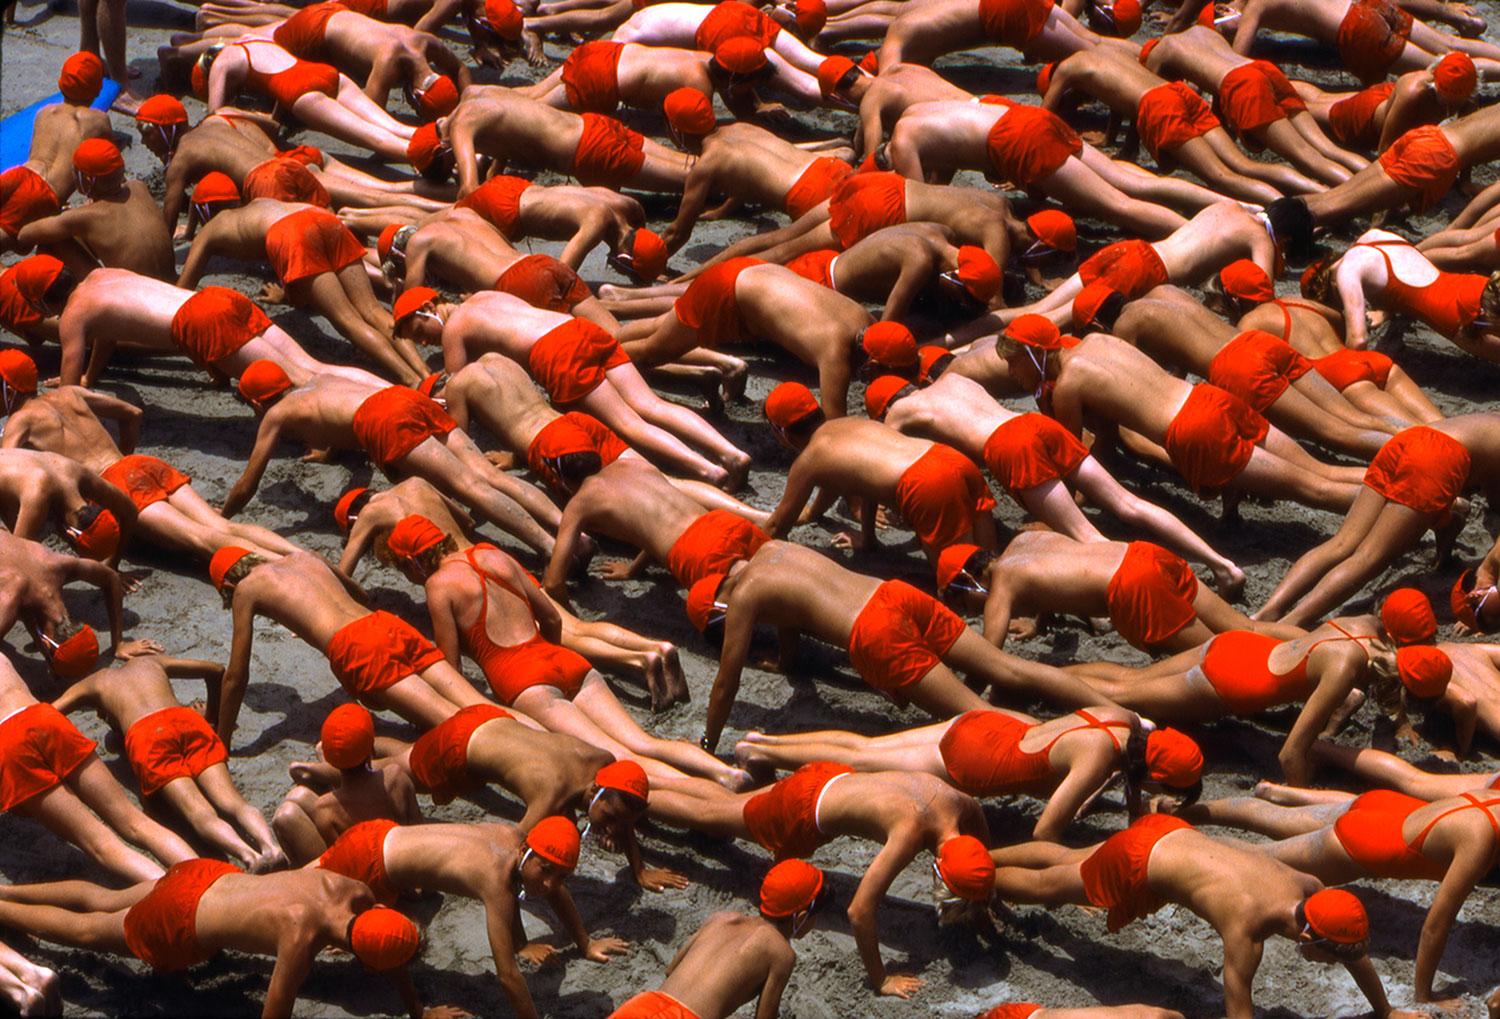 Roger Camp Landscape Photograph - Red Pushups, 1985 Huntington Beach, CA 